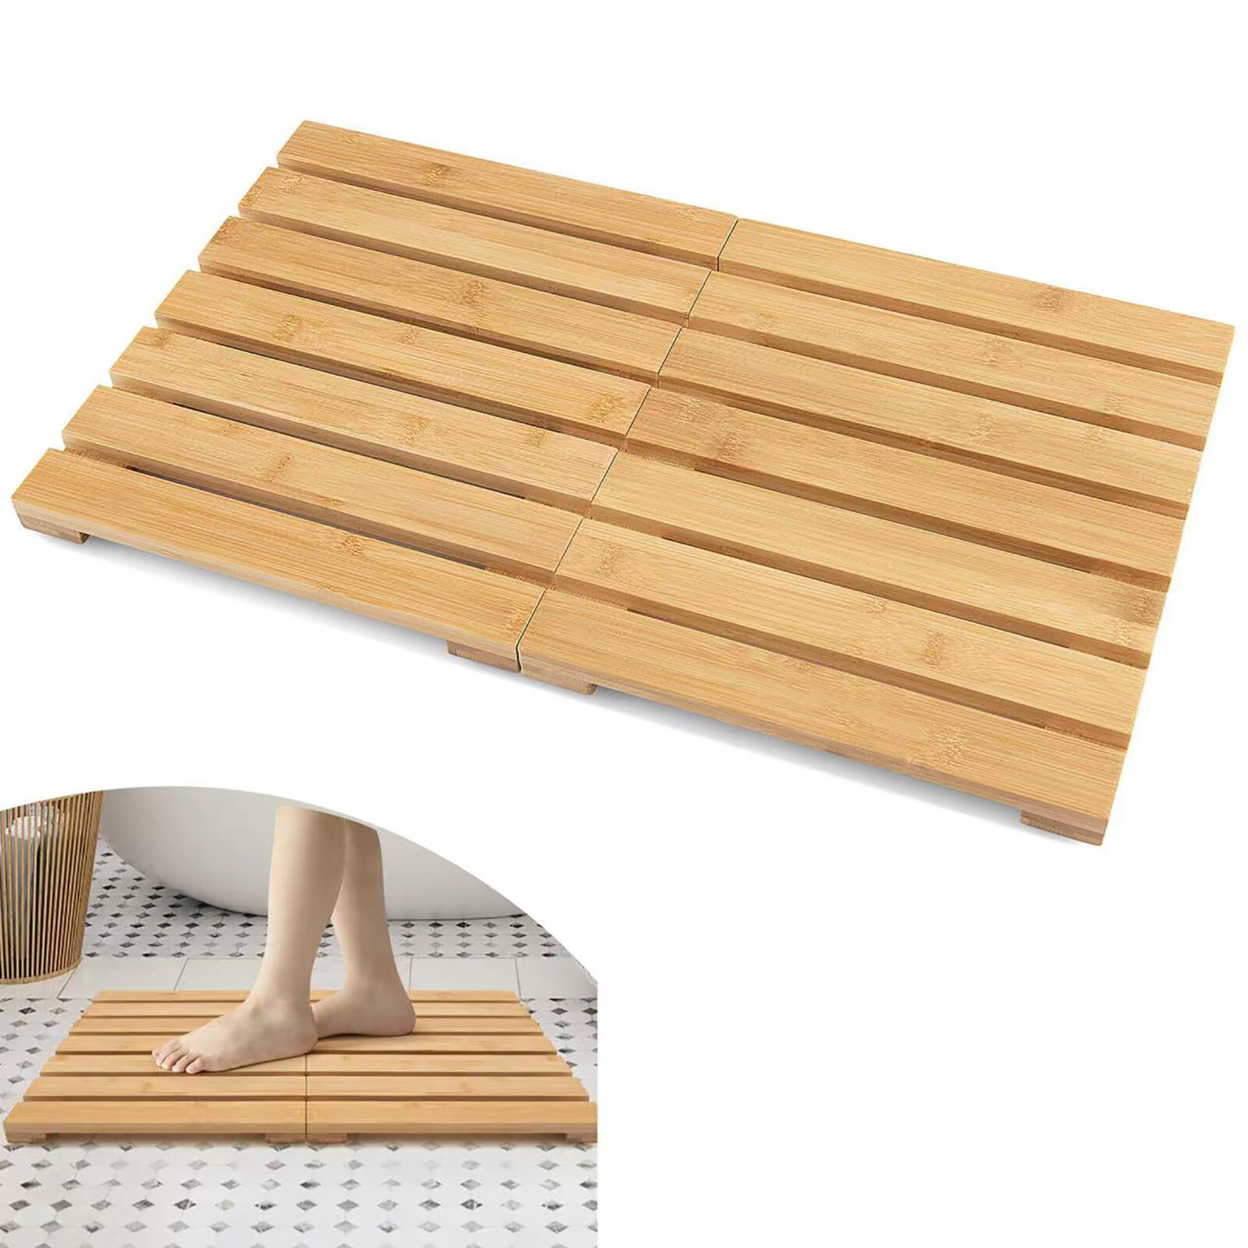 Bamboo Bath Mat Foldable Shower Mat W/ Non-slip Pads & Slatted Design